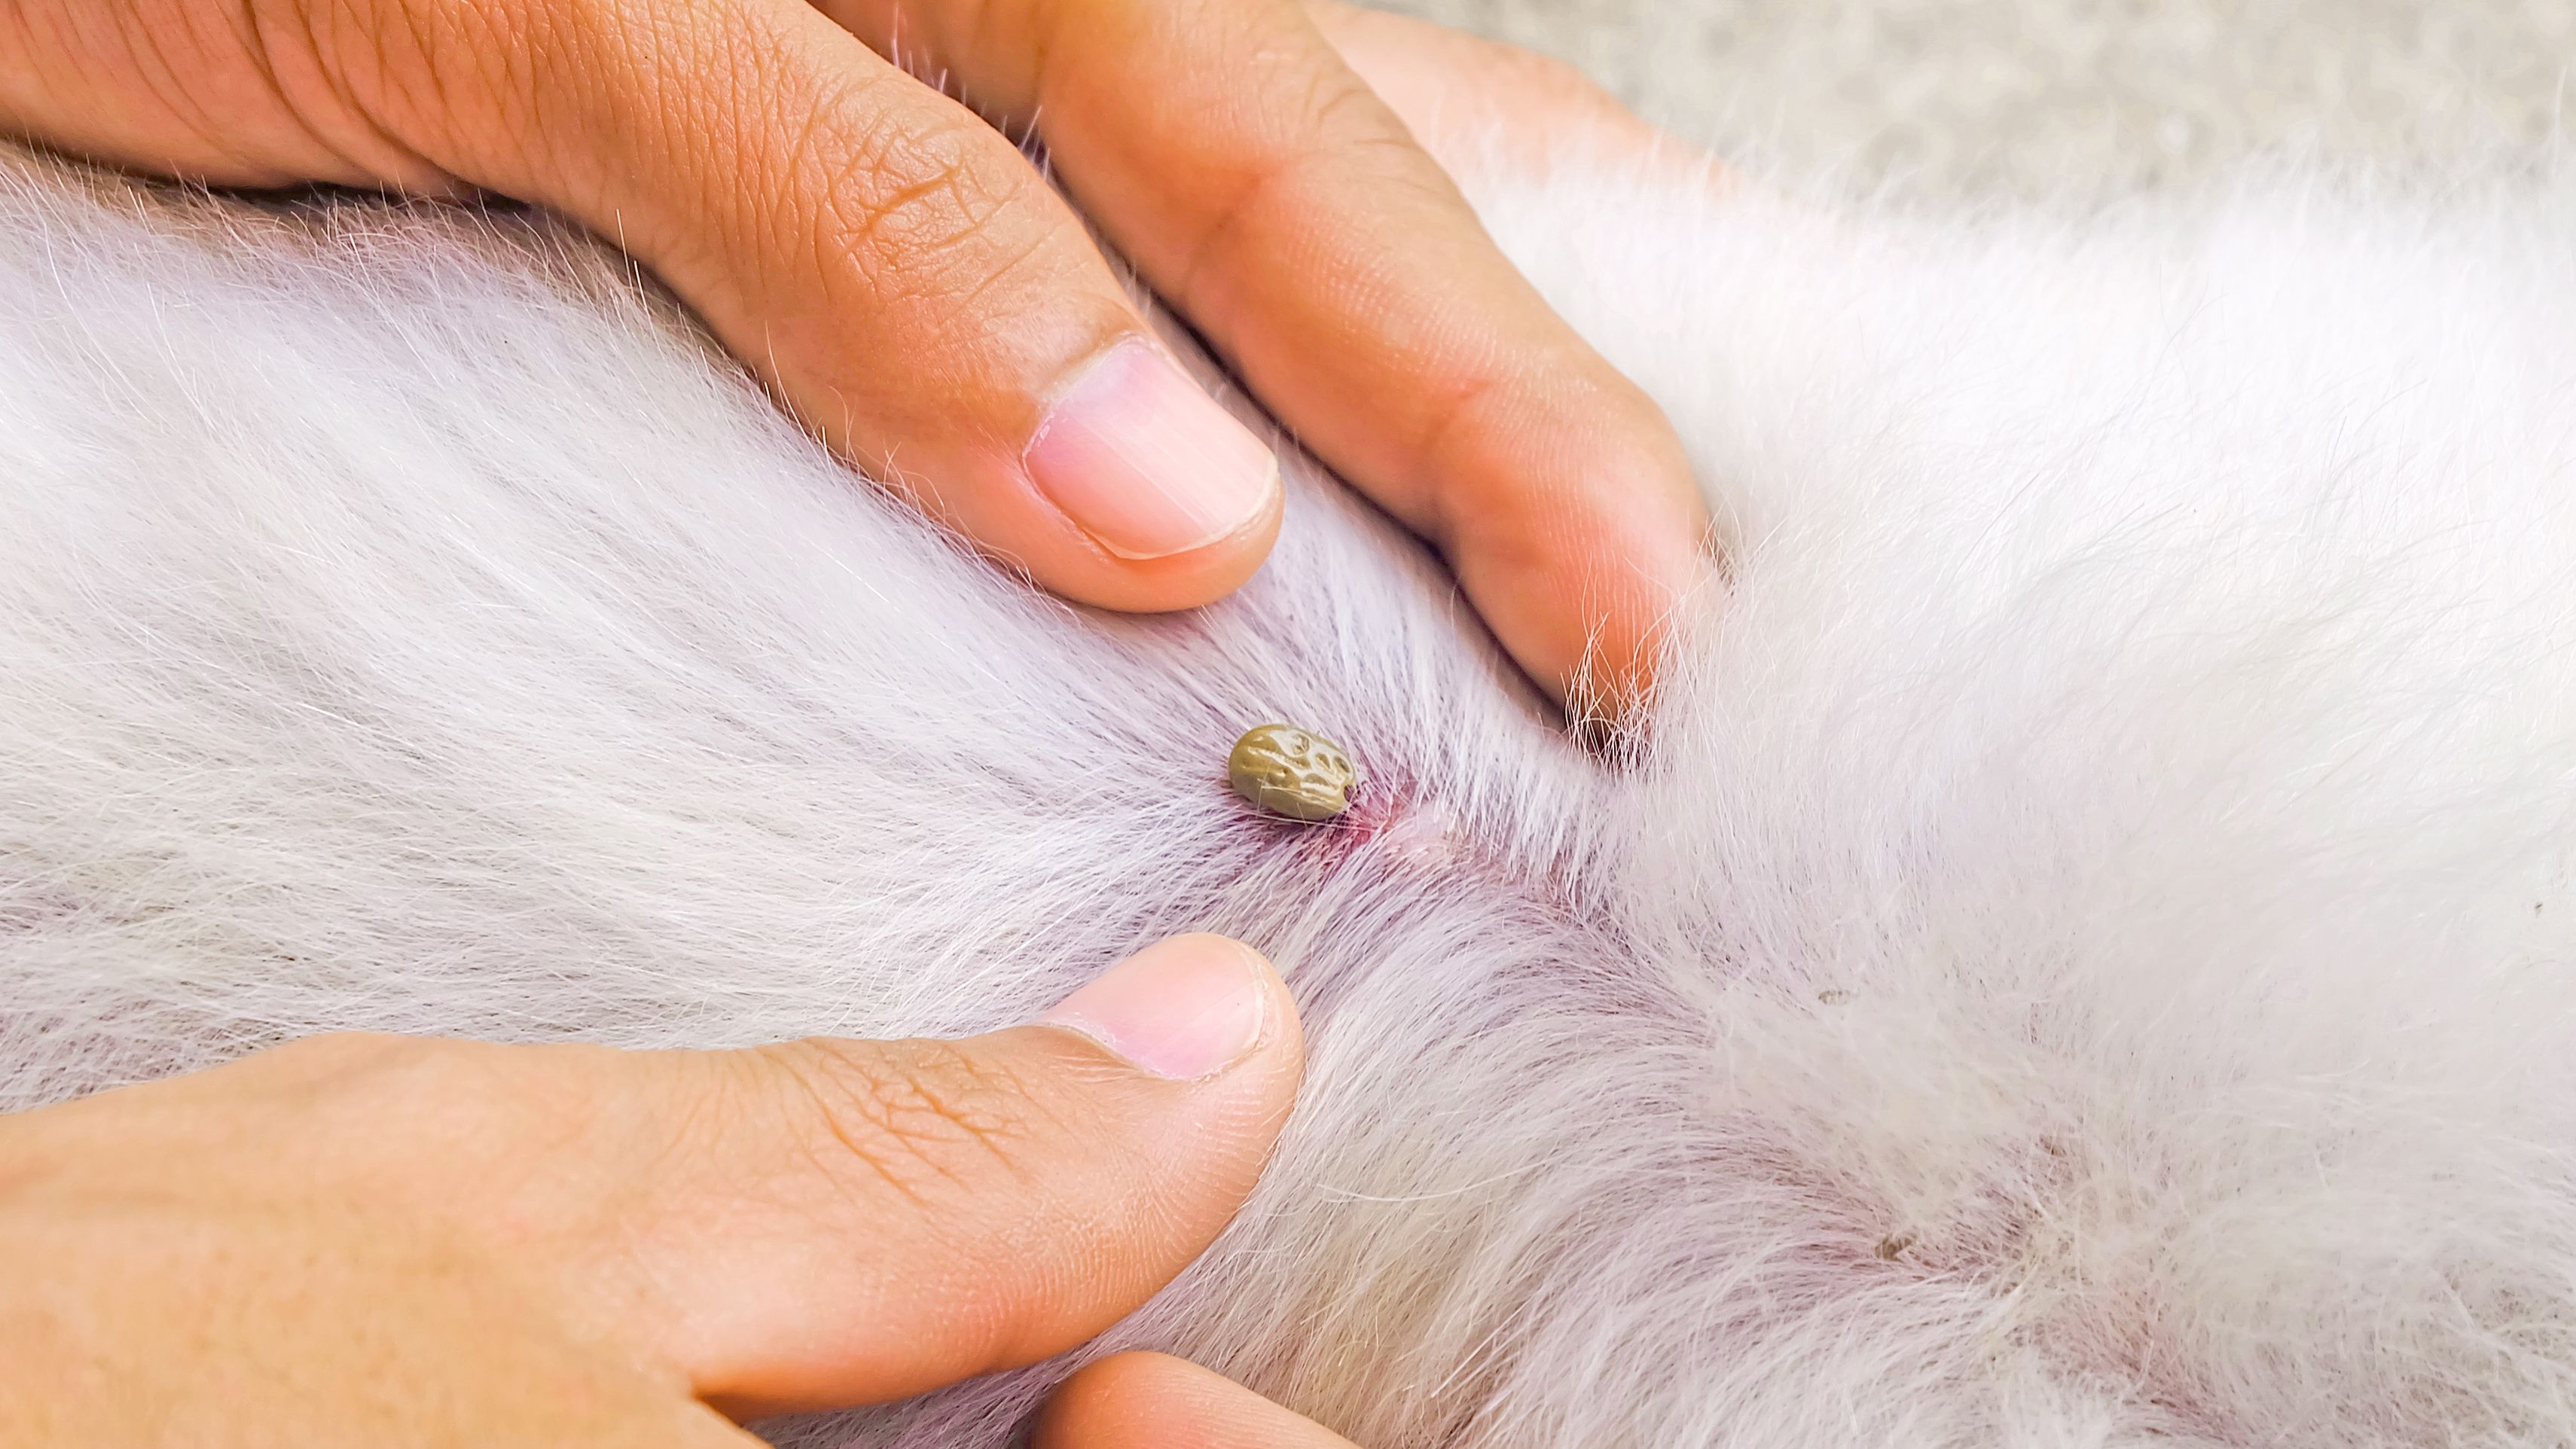 how do you stop a dog tick infestation